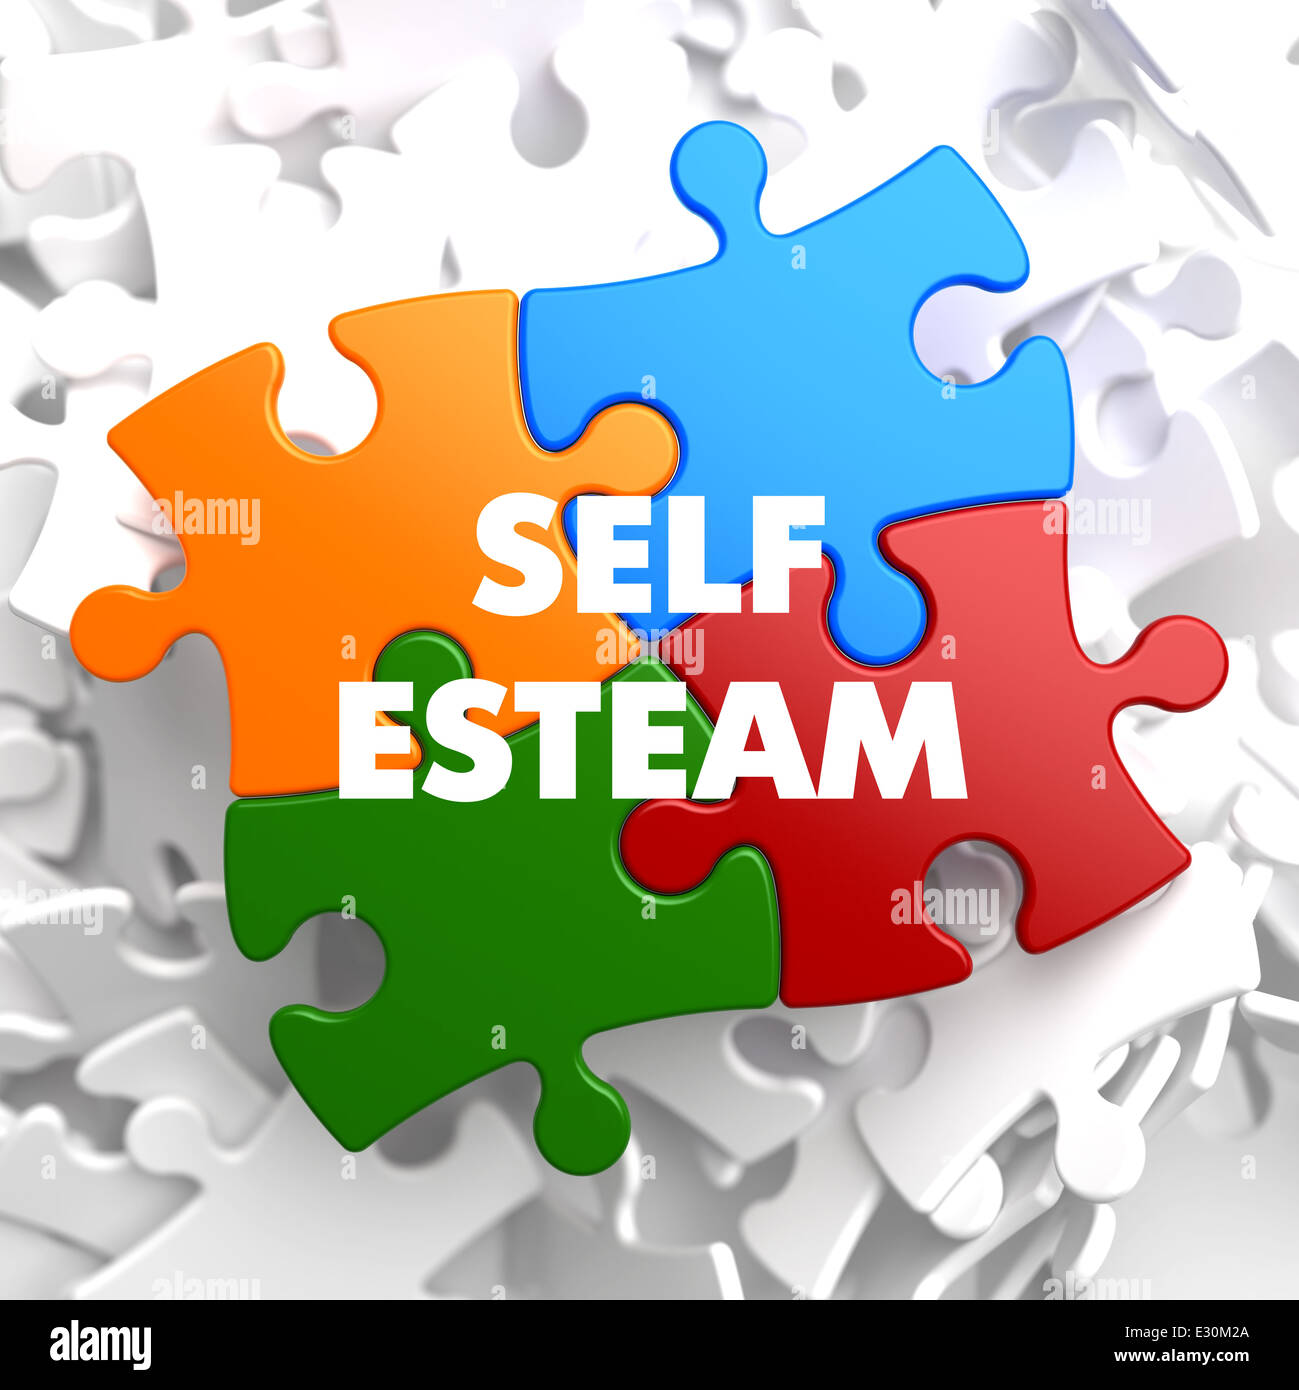 Self Esteem on Multicolor Puzzle. Stock Photo